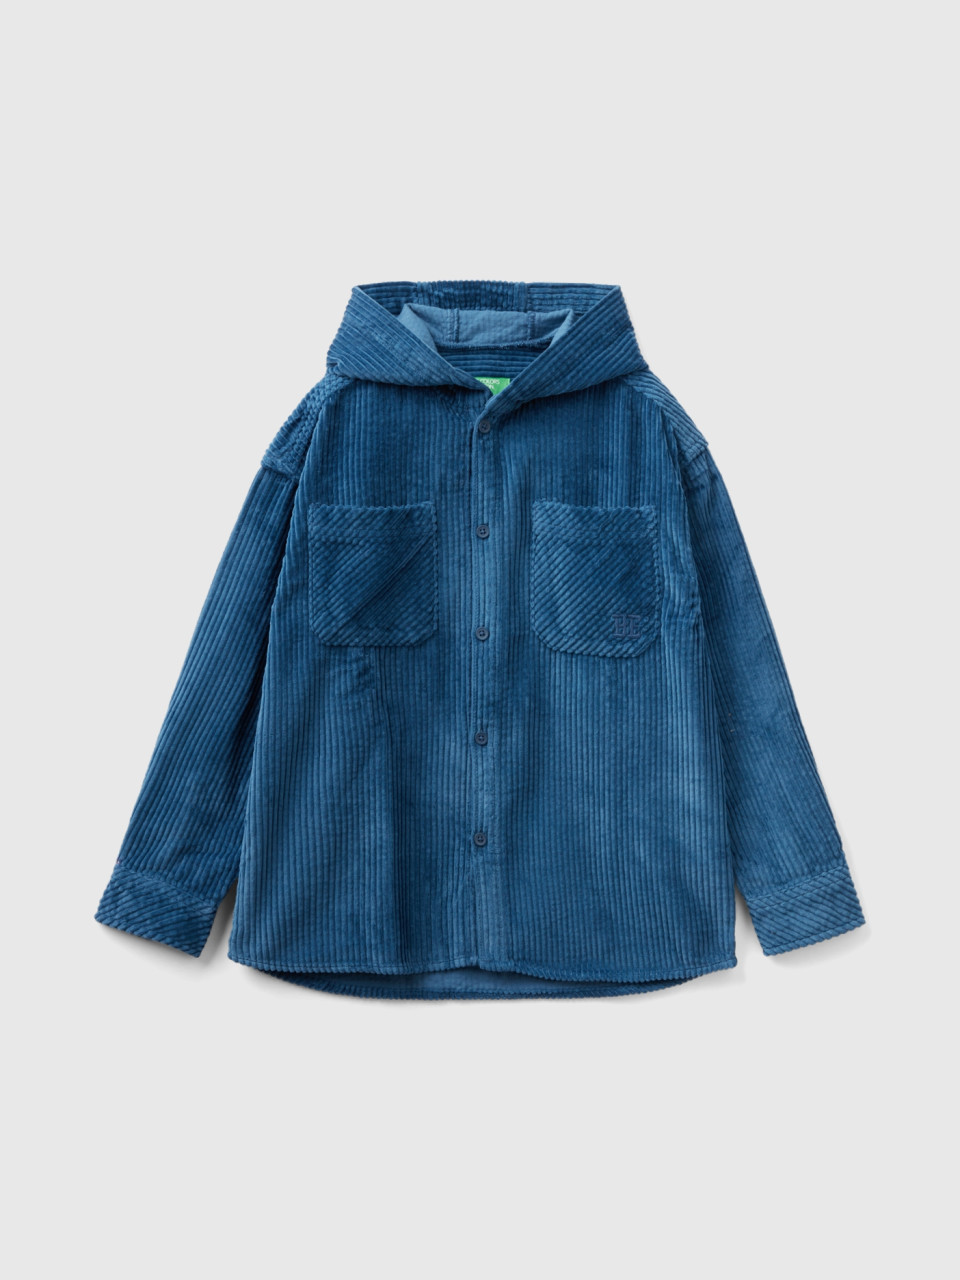 Benetton, Velvet Shirt With Hood, Air Force Blue, Kids